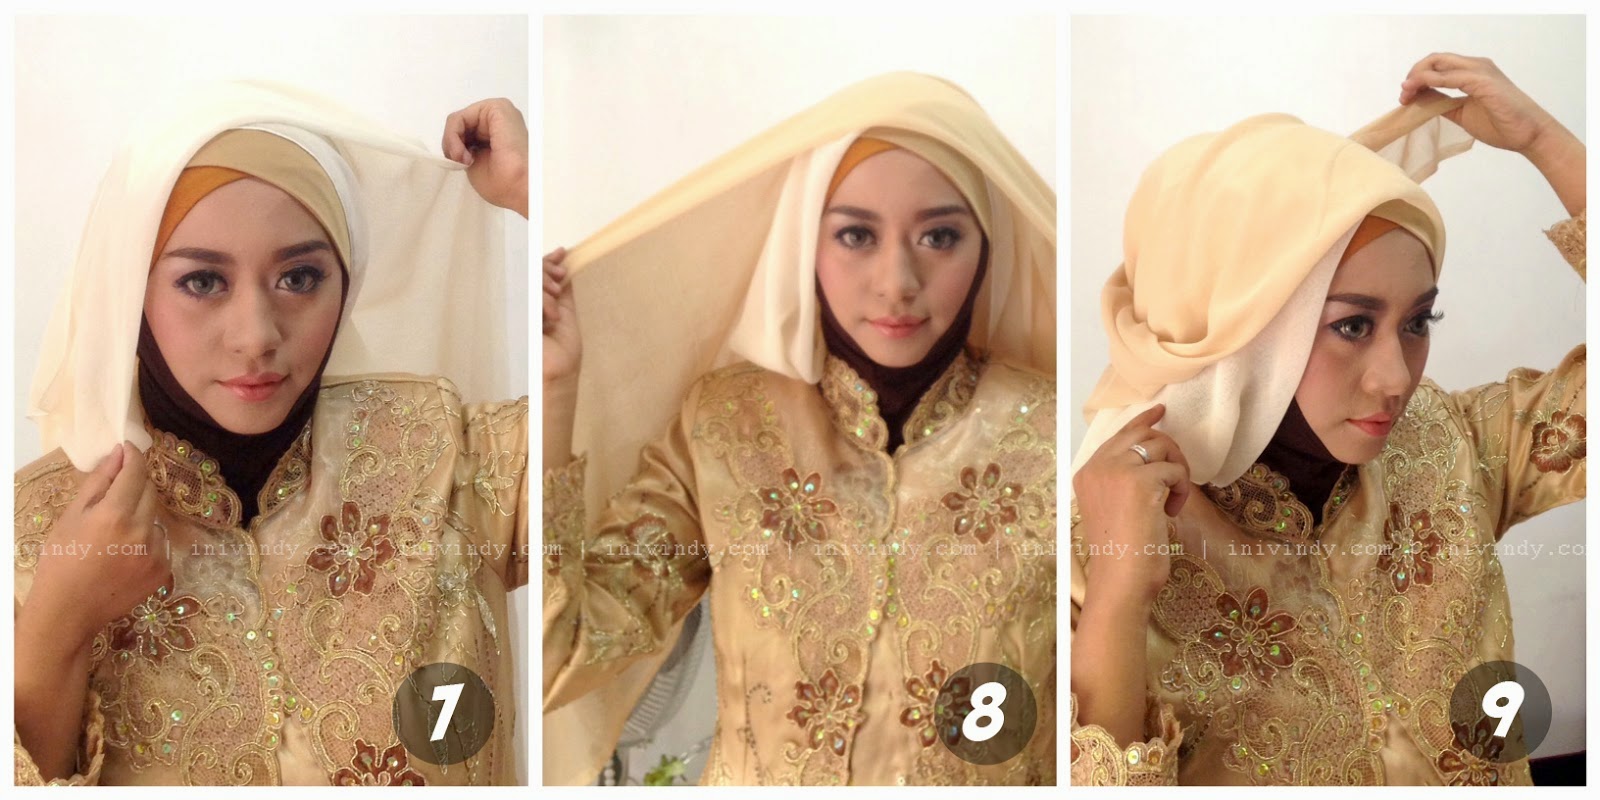 Tutorial Hijab Segi Empat Modern Untuk Kebaya Tutorial Hijab